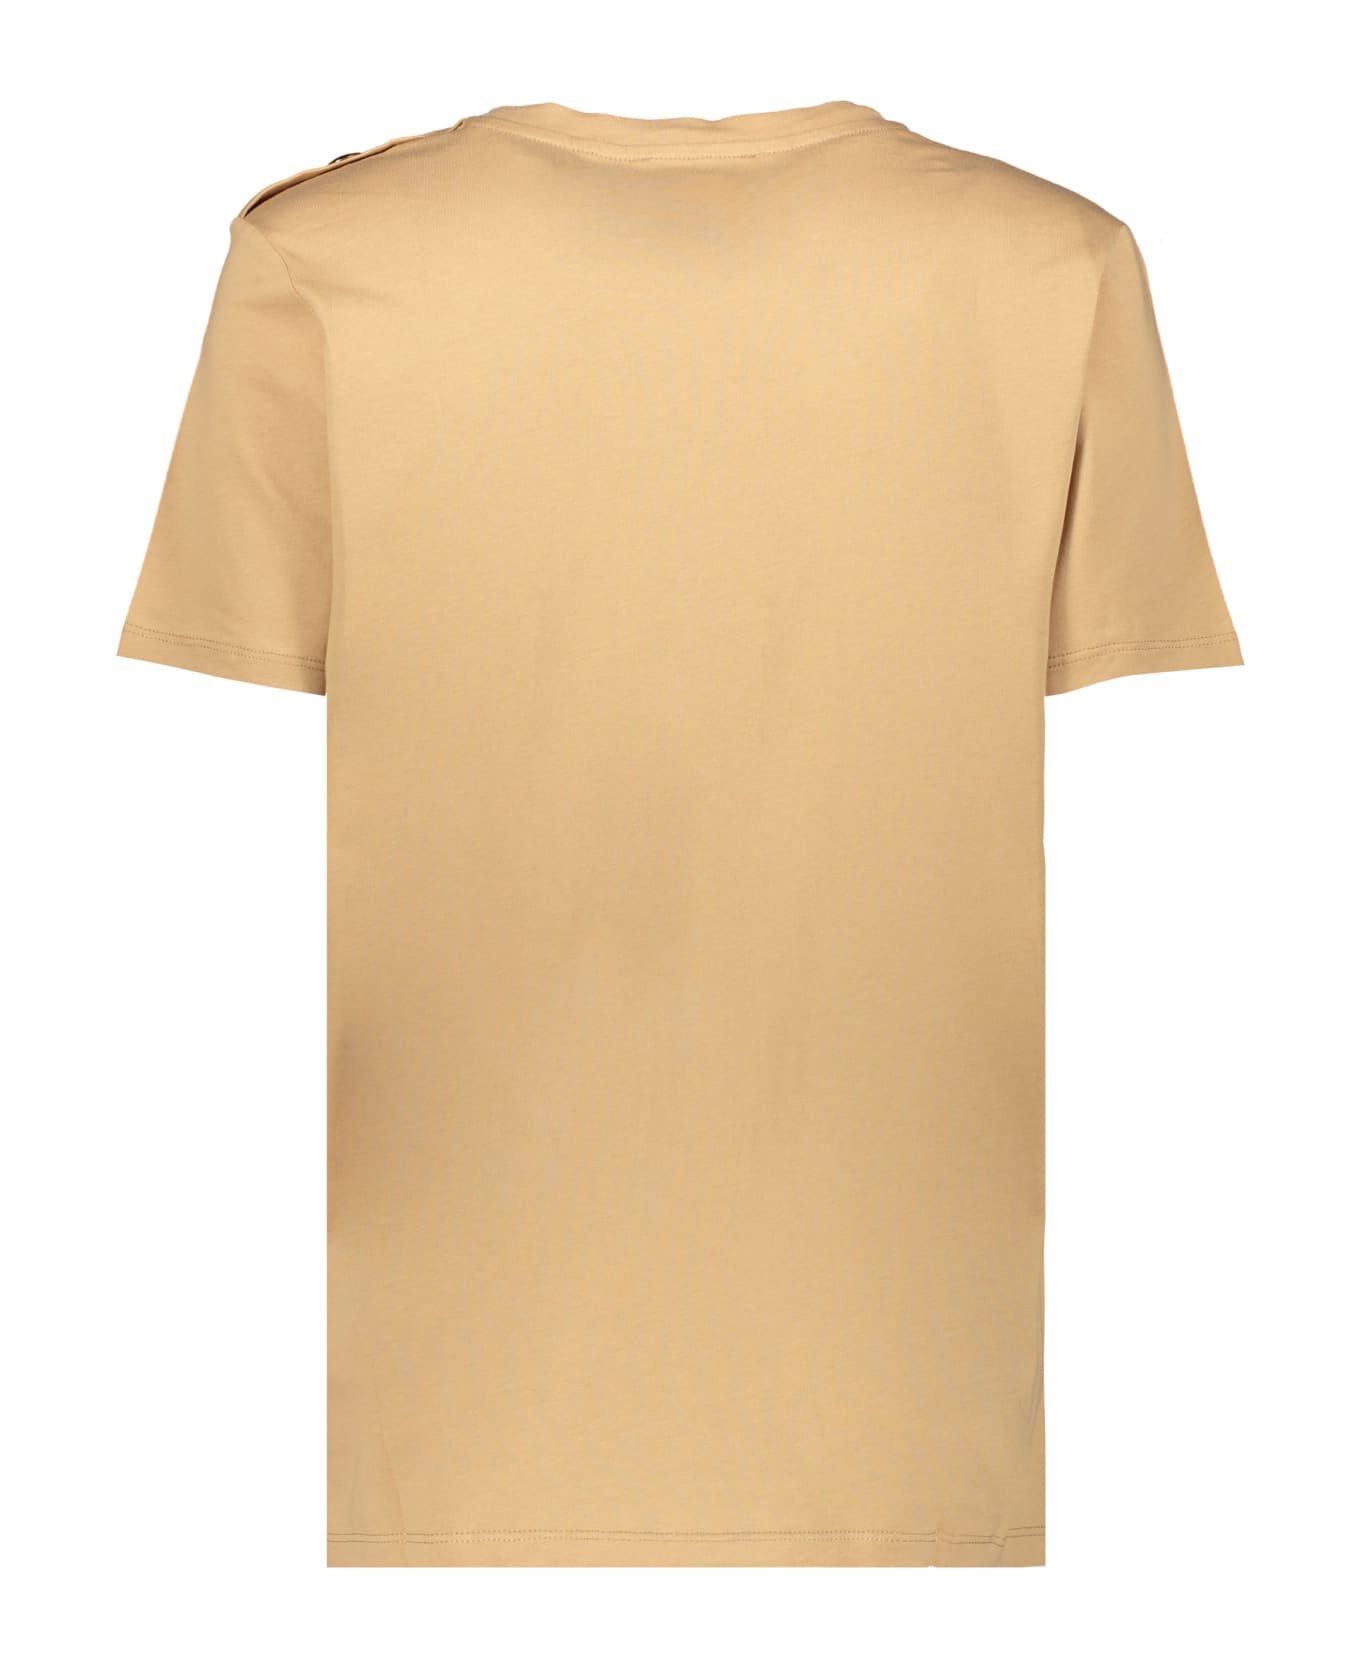 Balmain Logo Print T-shirt - Camel Tシャツ